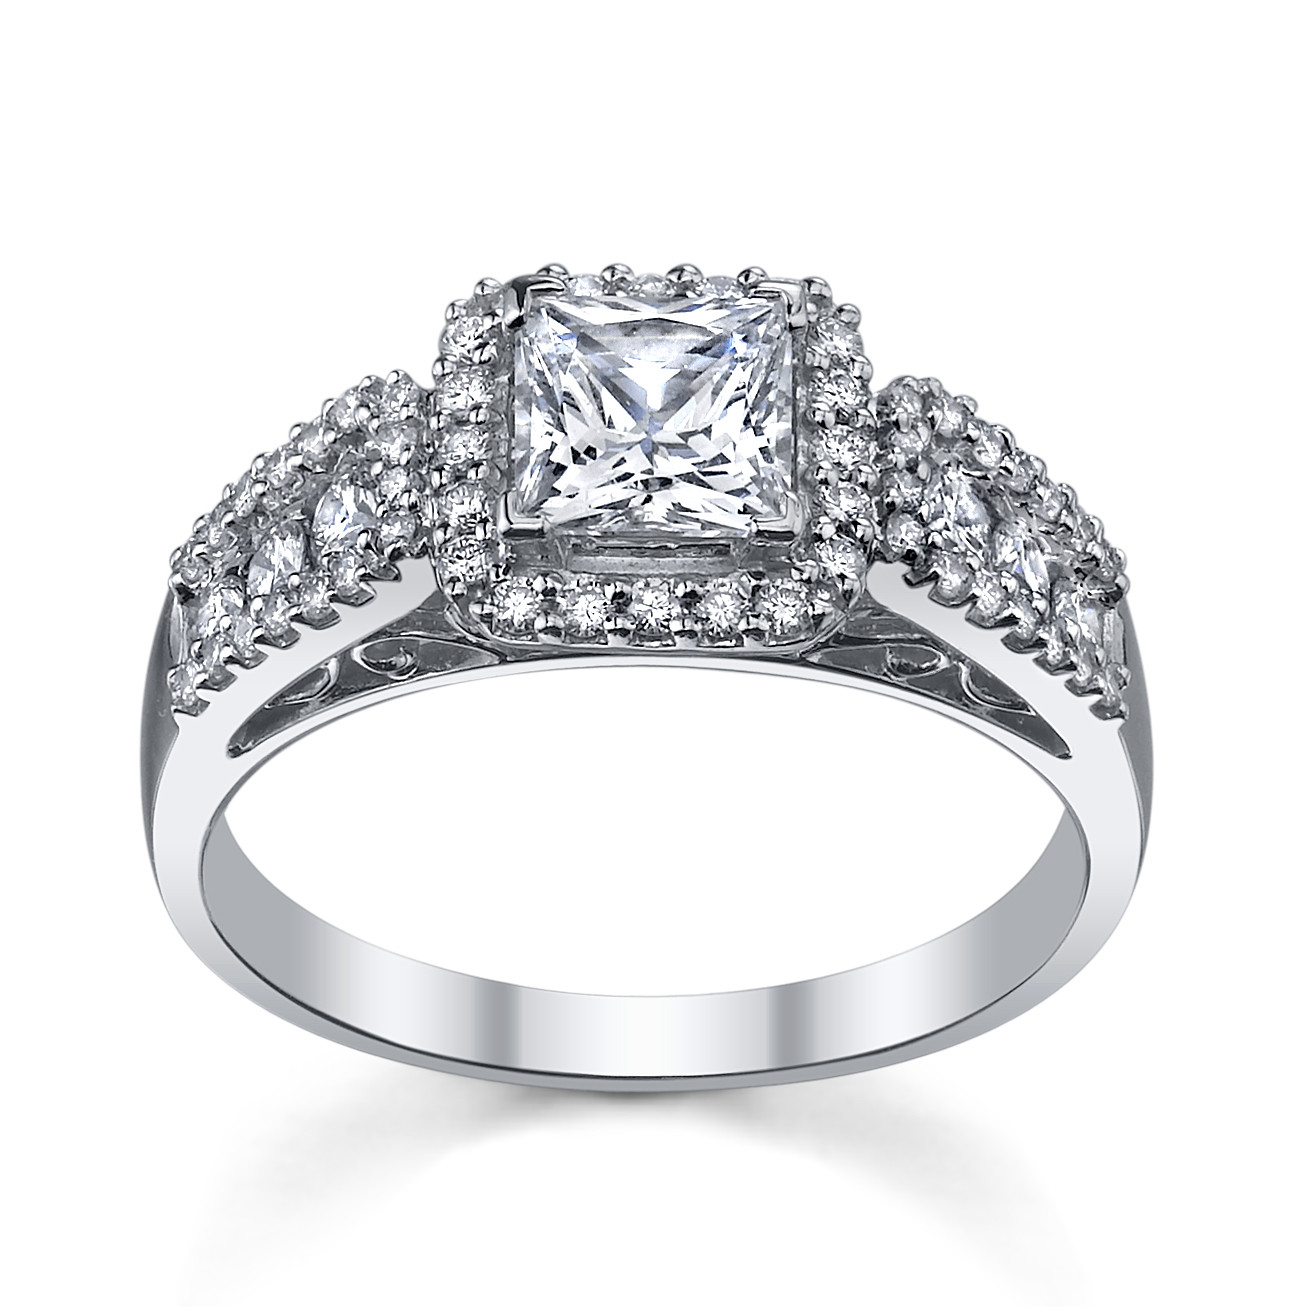 Princes Cut Wedding Rings
 6 Princess Cut Engagement Rings She ll Love Robbins